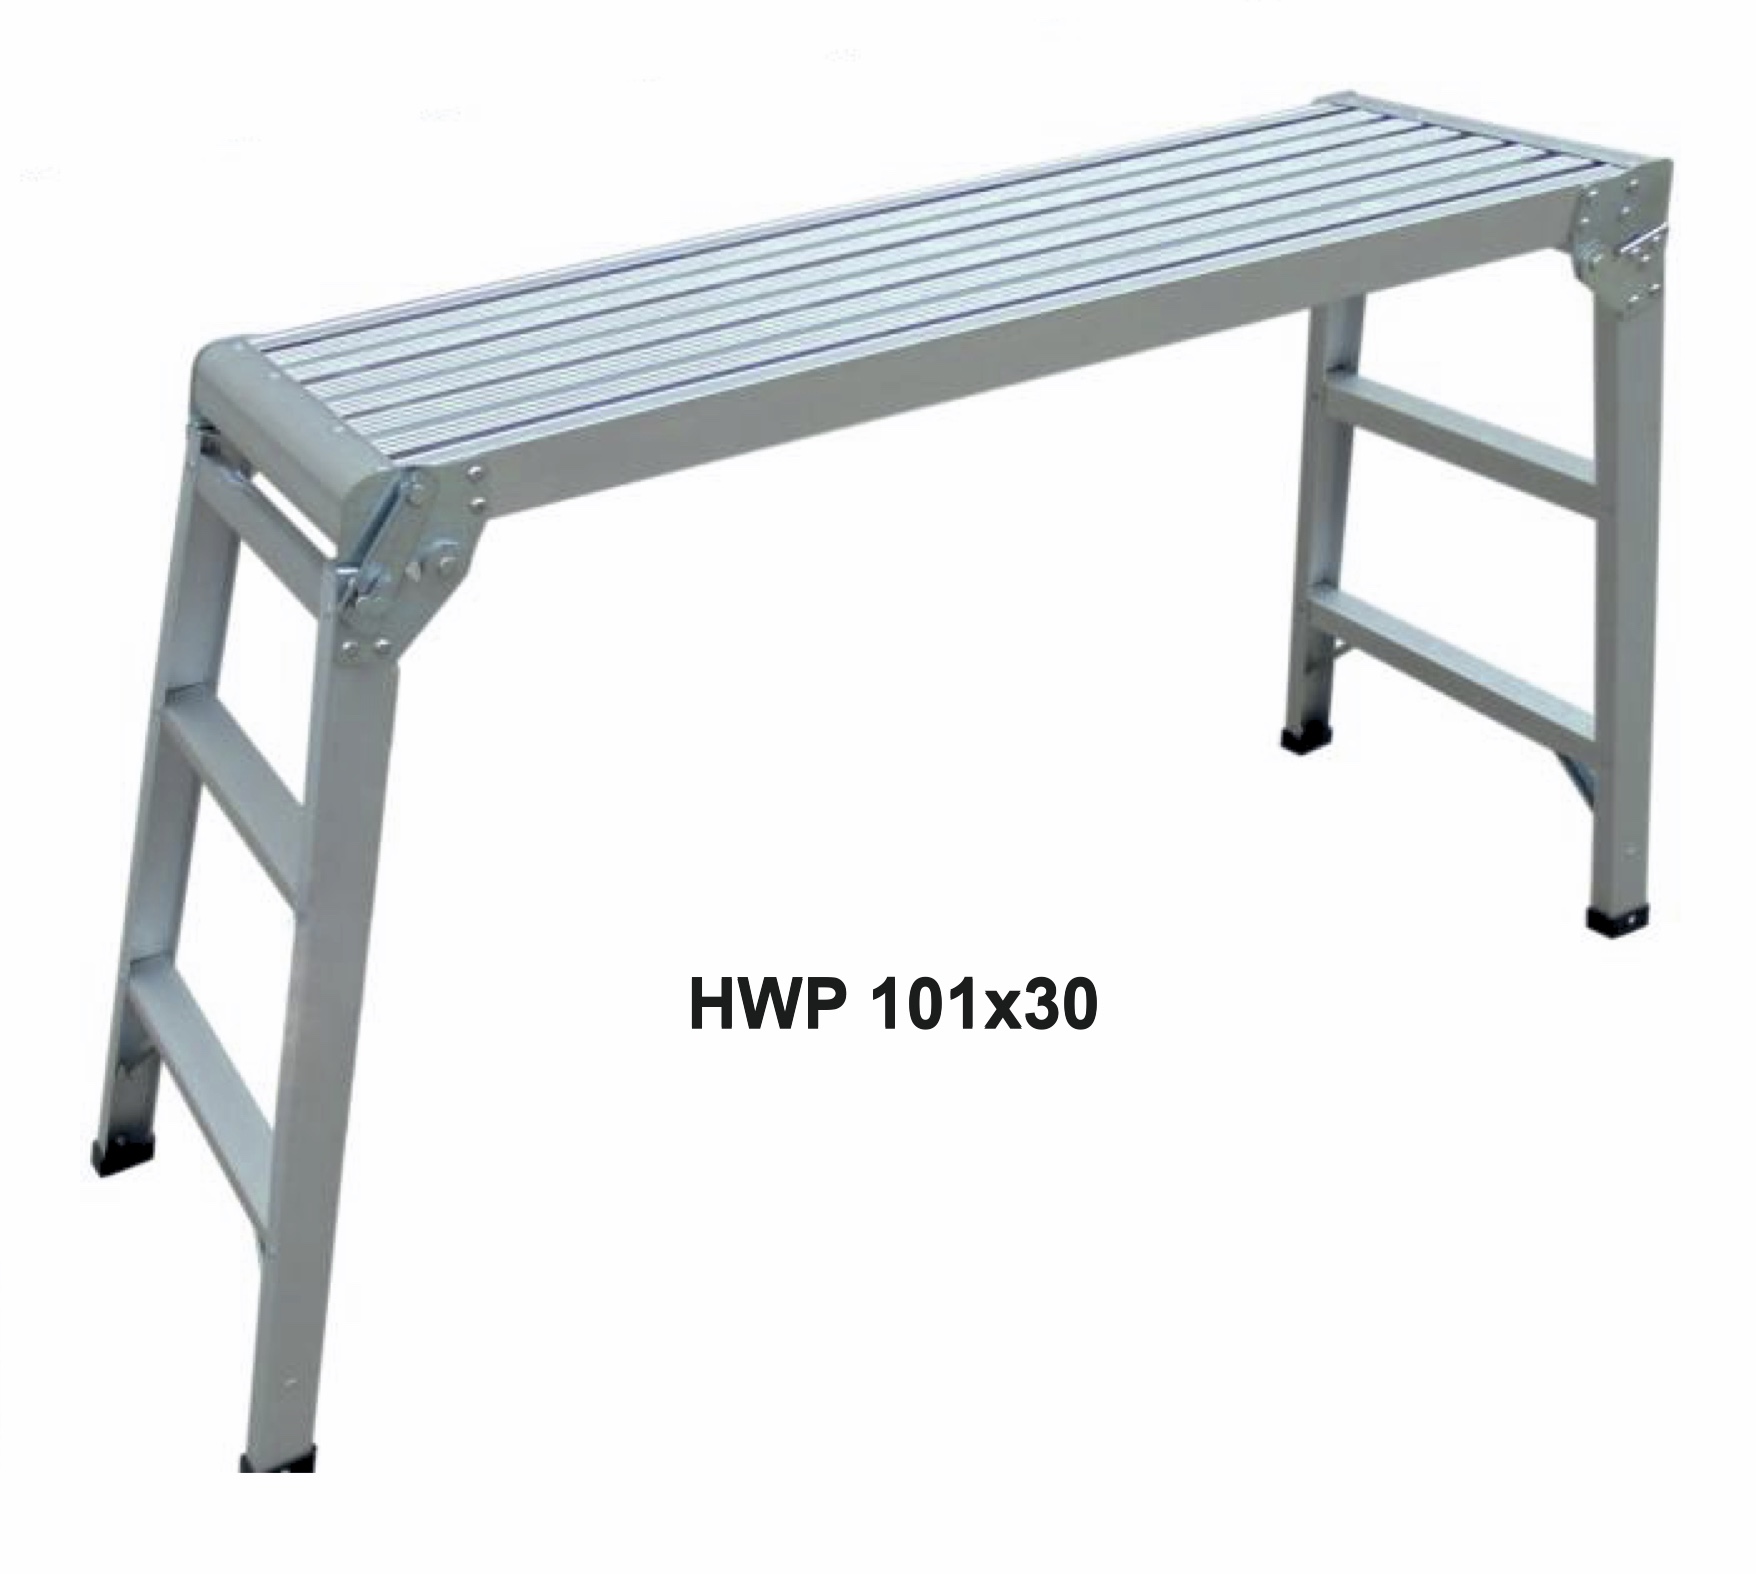 Алюминиевая рабочая платформа Алюмет HWP 101x30 складная алюминиевая погрузочная рампа gierre